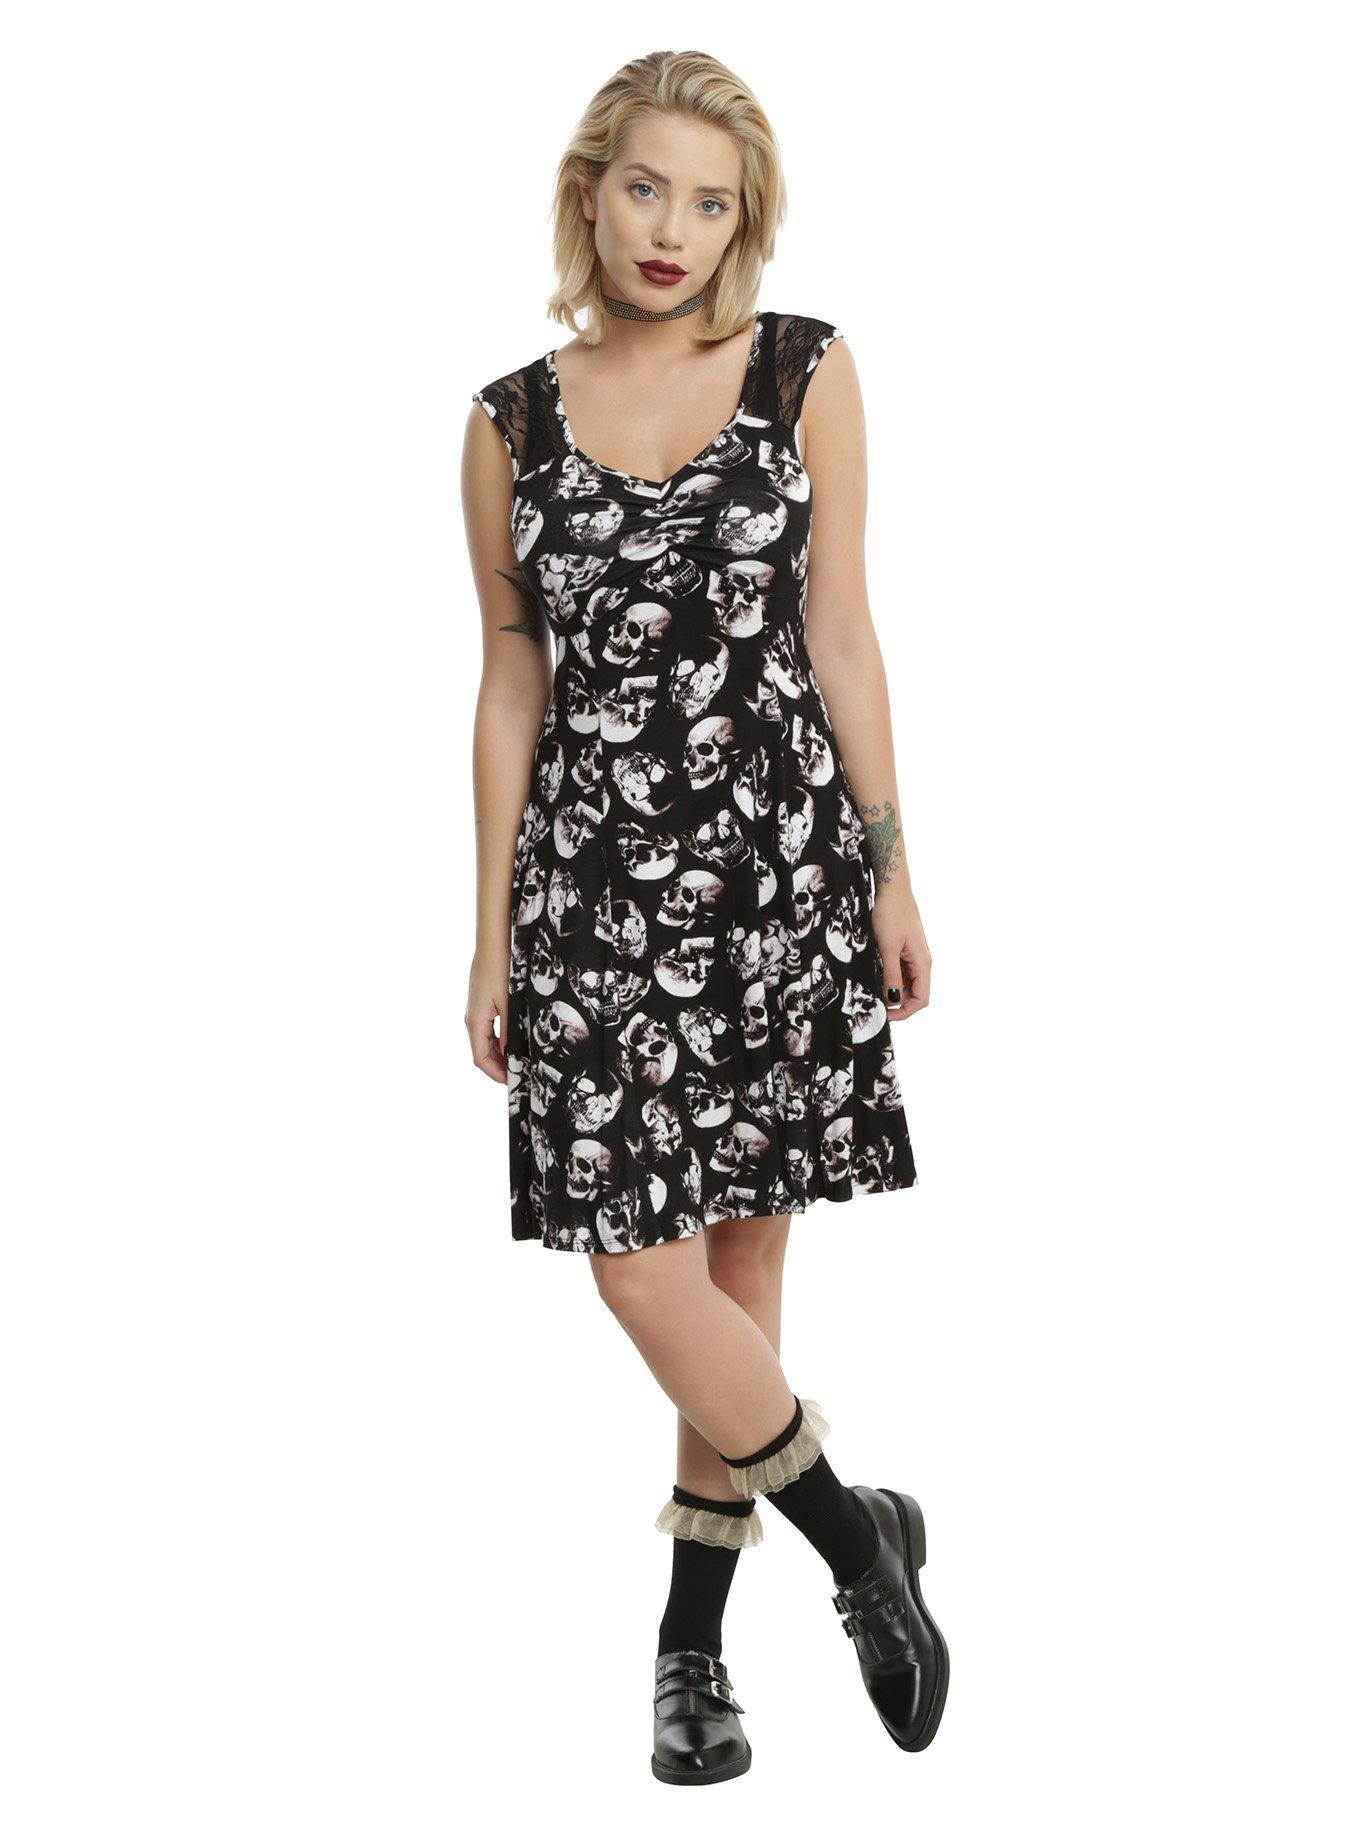 Black & White Skull Print Lace Cap Sleeve Dress, , alternate